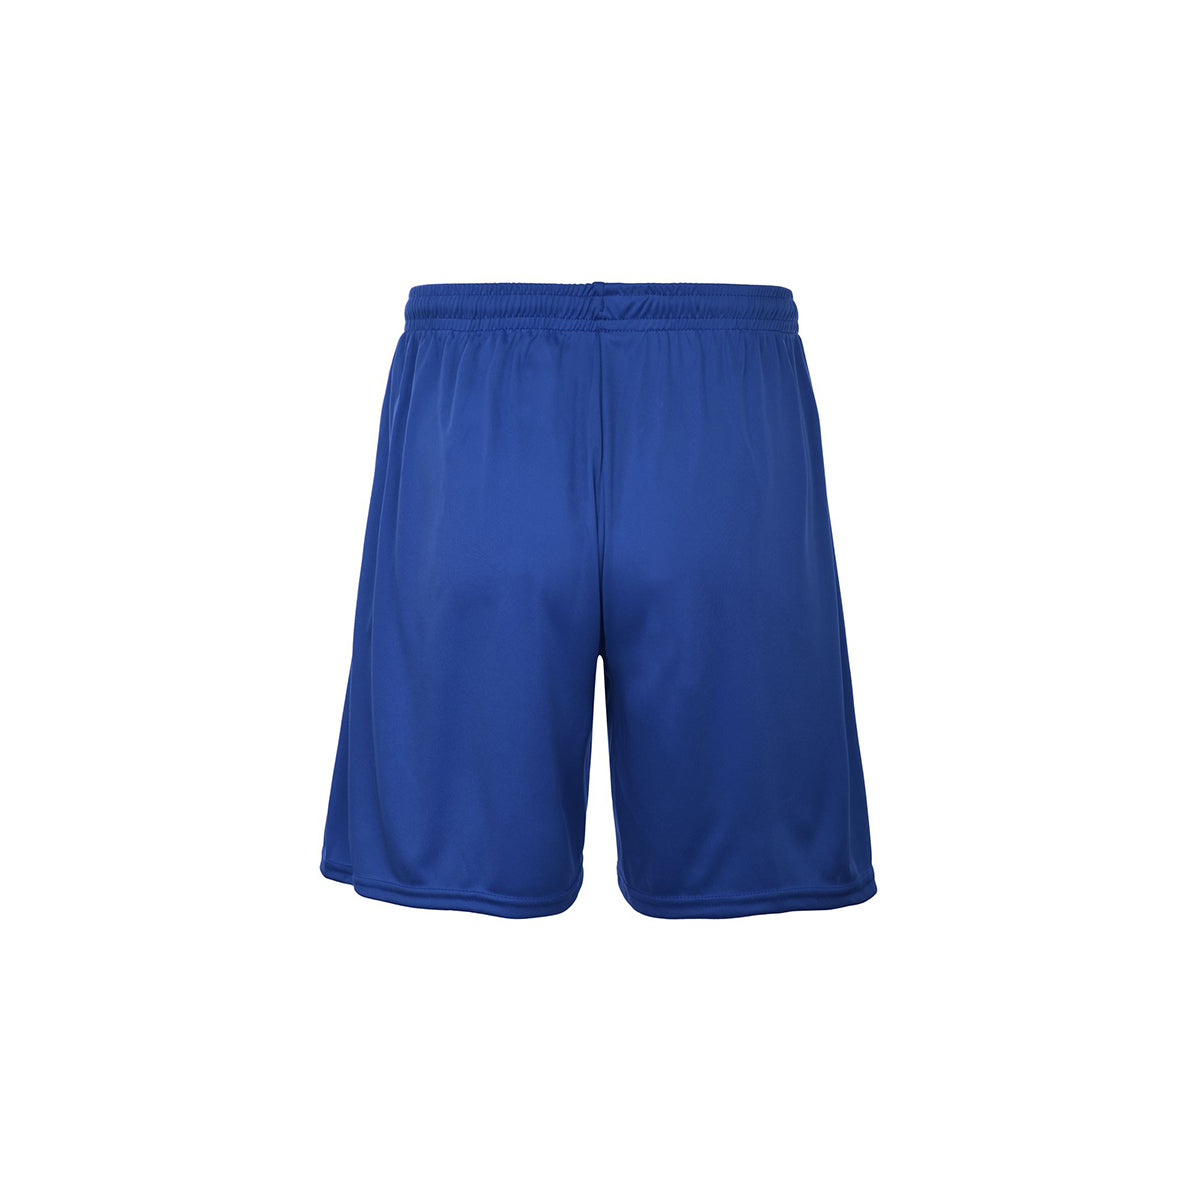 Pantalones cortes Borgo Azul Hombre - imagen 3